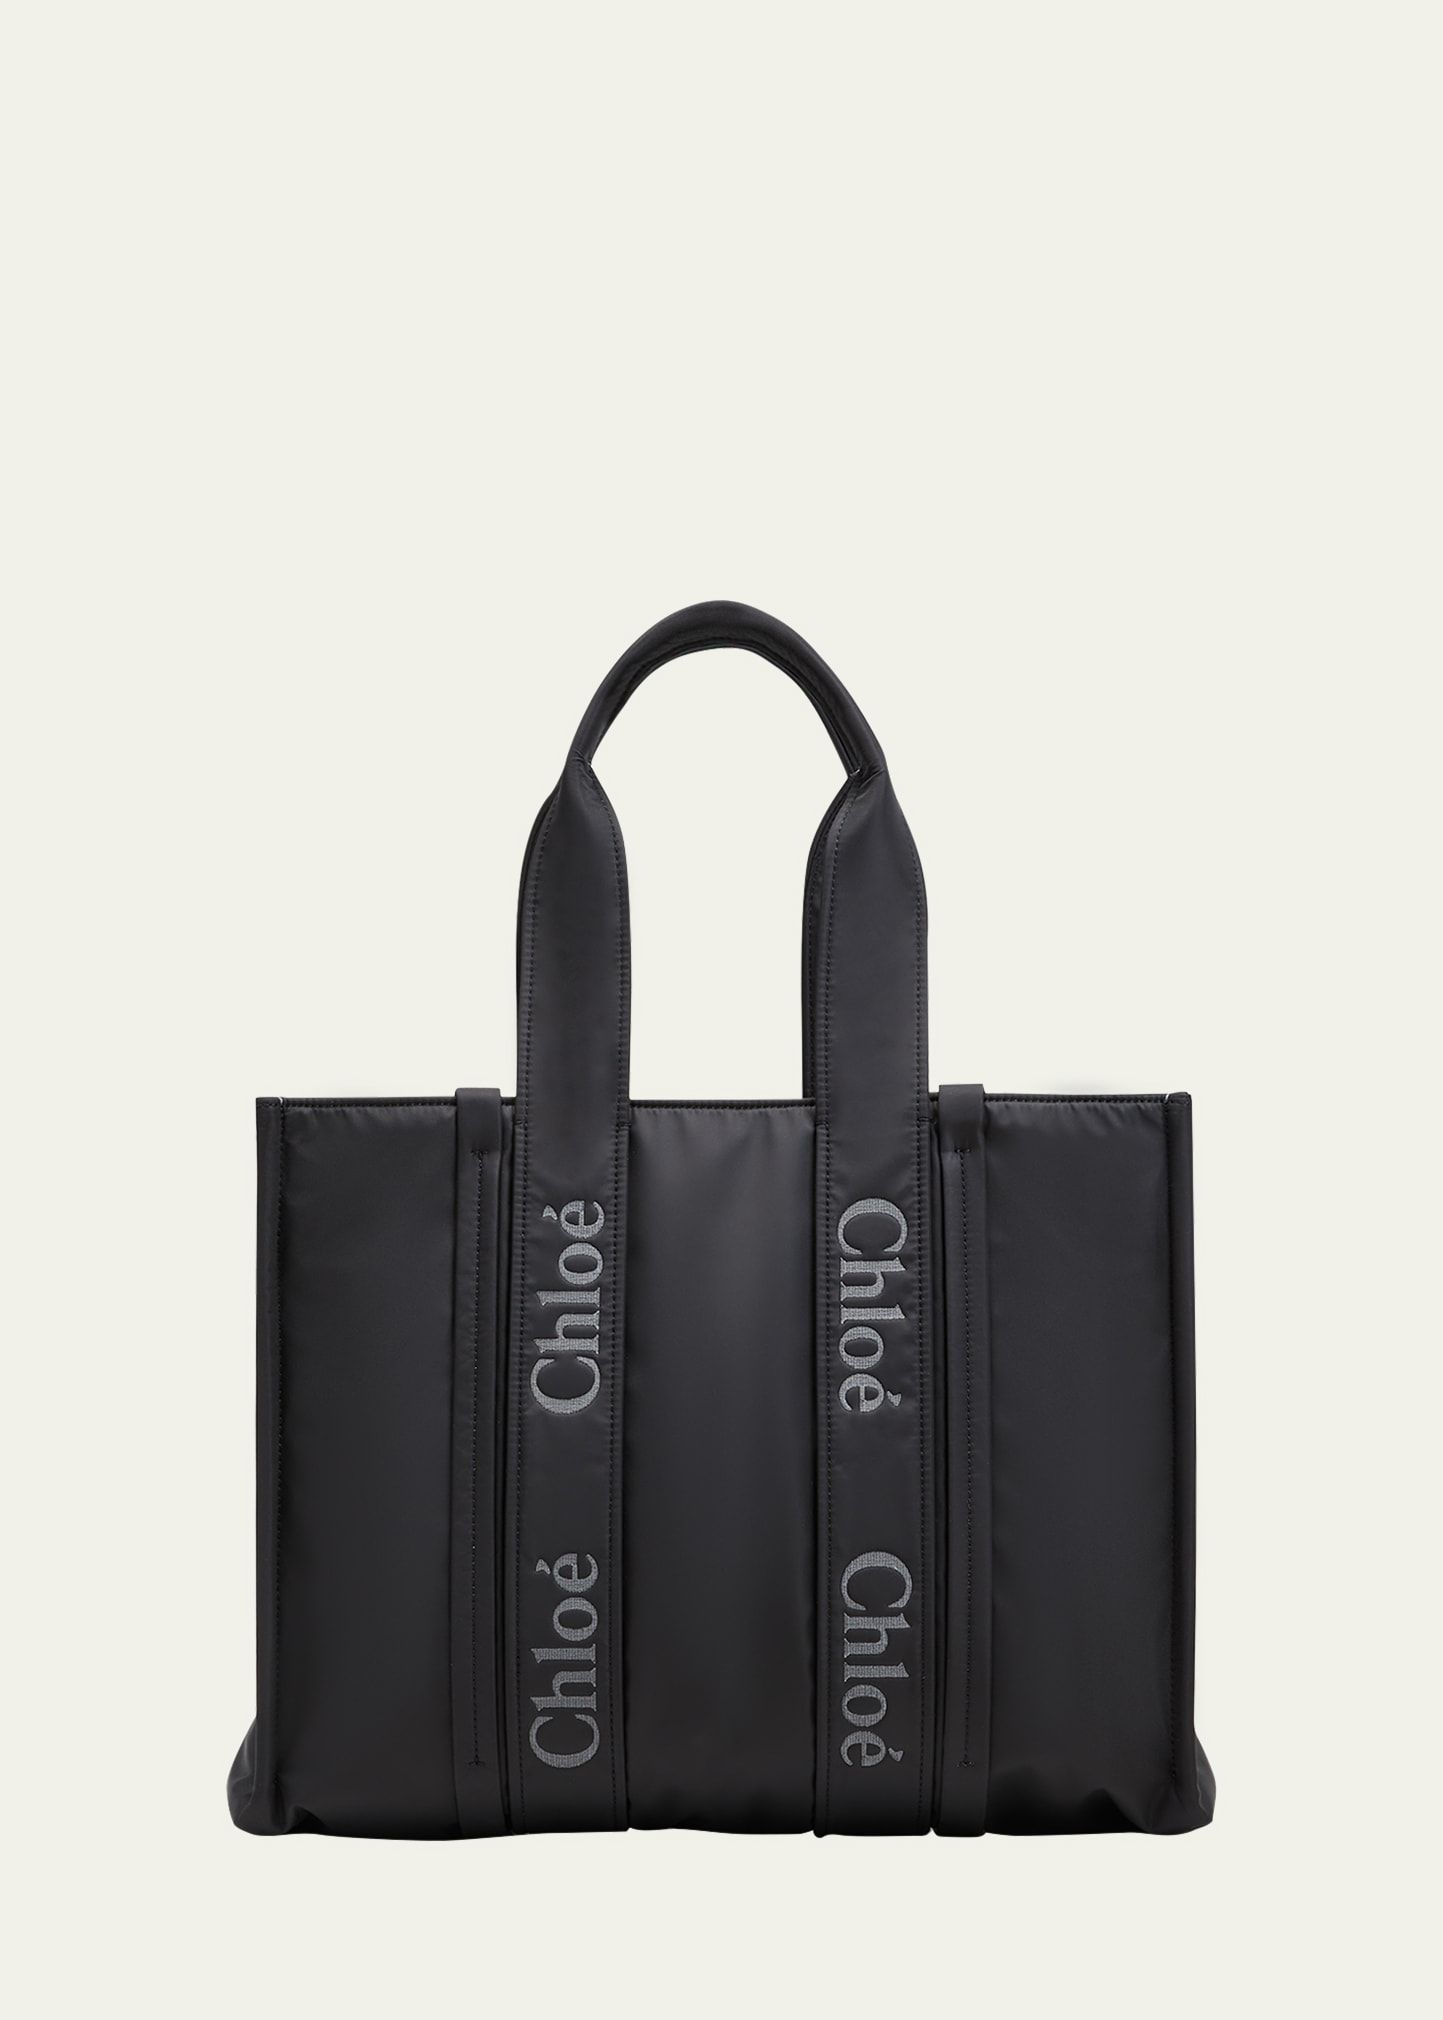 Chloe Woody Large Tote Bag in Recycled Nylon | Bergdorf Goodman